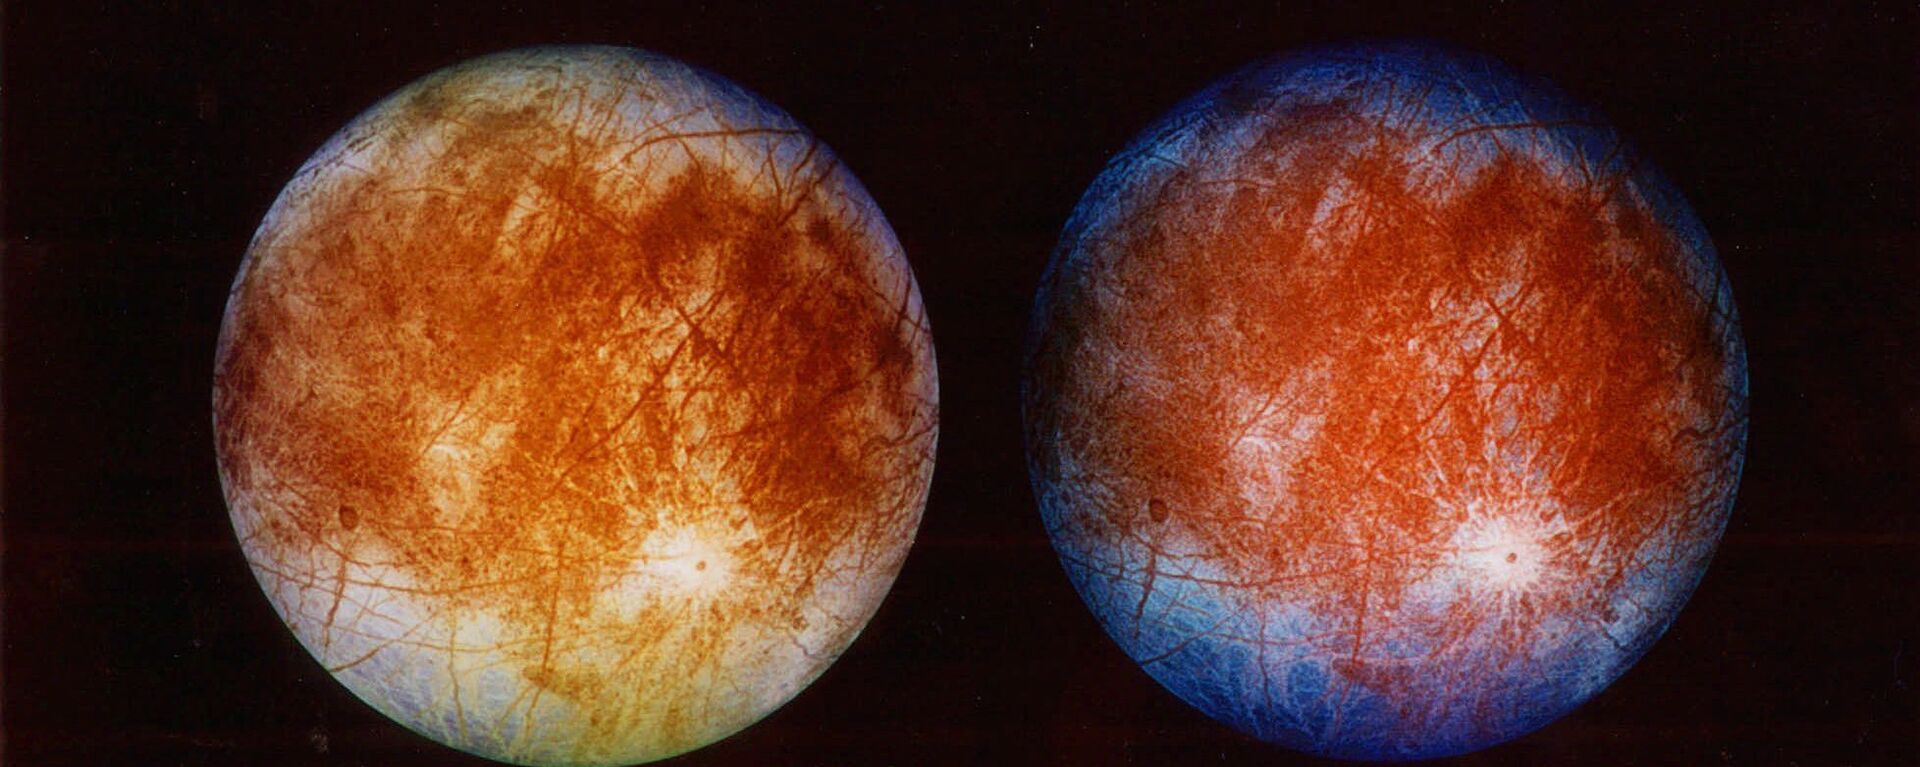 Two views of Jupiter's ice-covered moon, Europa - Sputnik Srbija, 1920, 05.02.2015